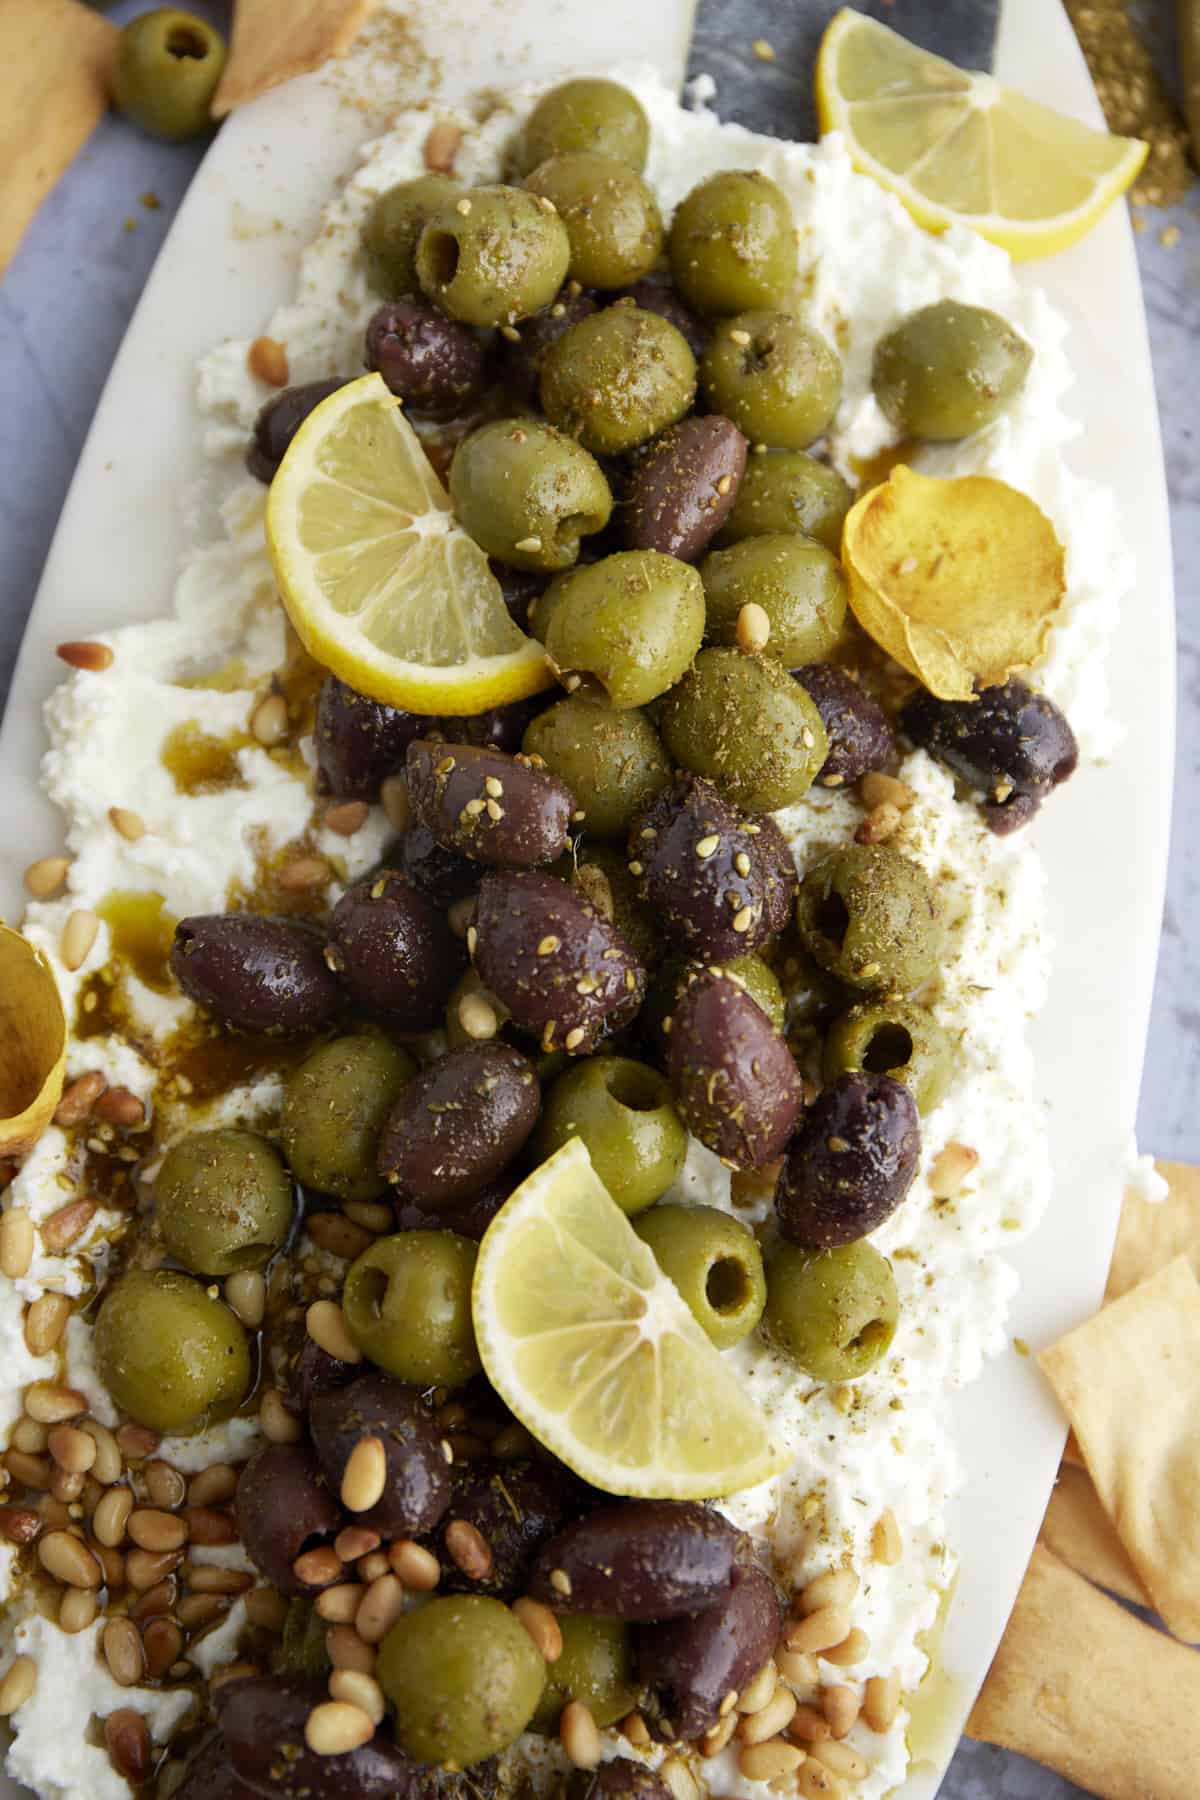 a feta board topped with marinated kalamata and green olives, lemon wedges, and seasonings